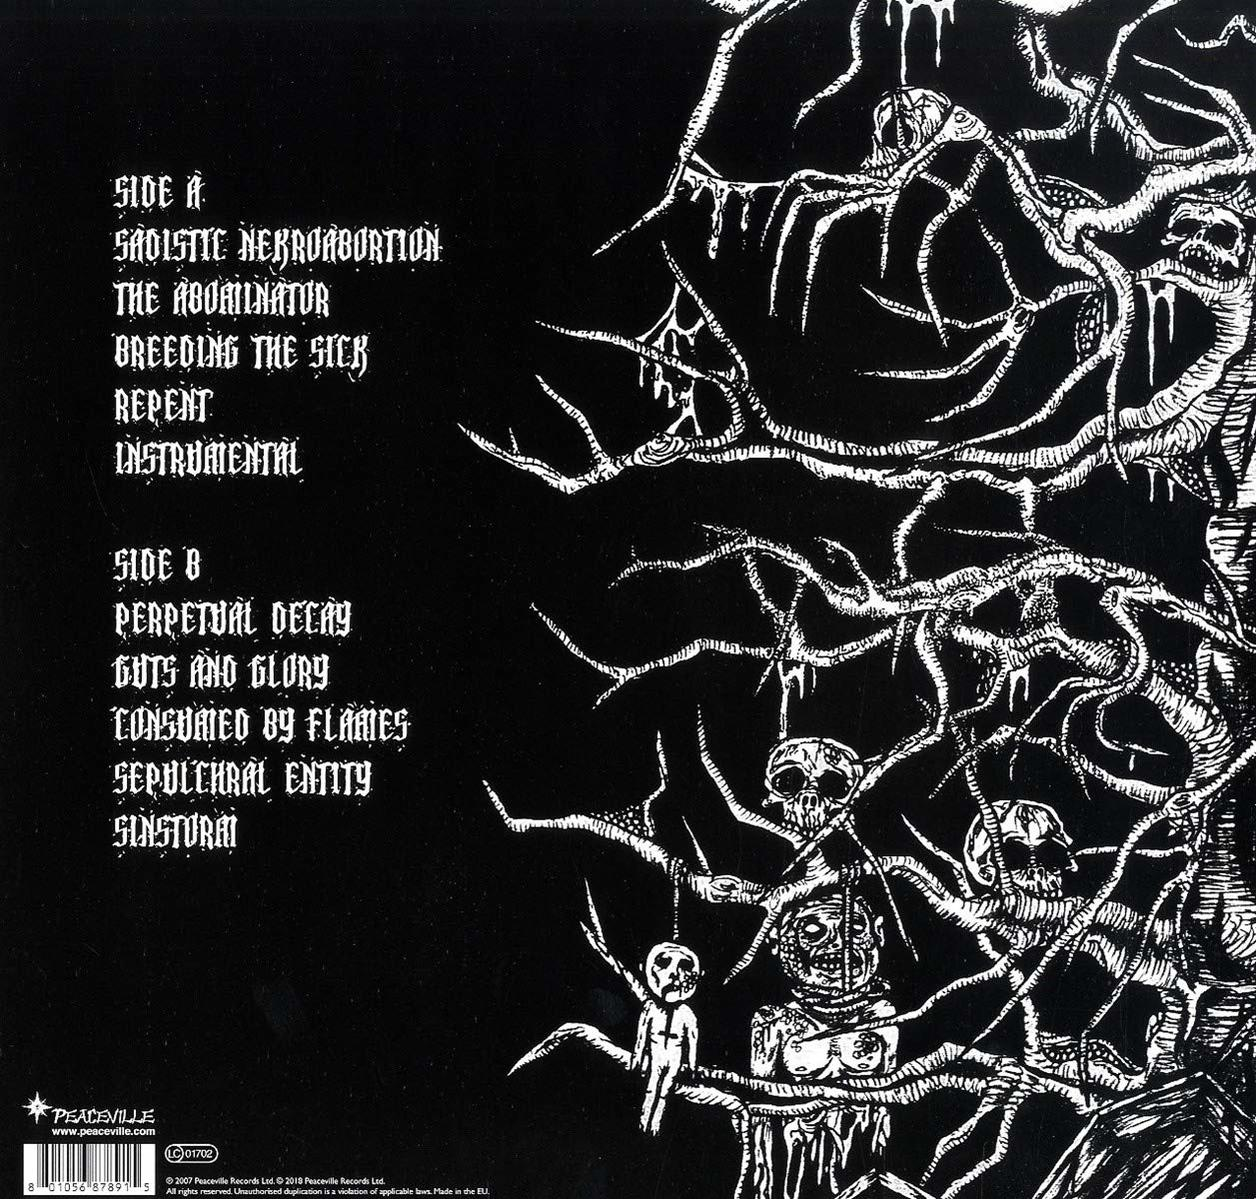 Decay (Vinyl) - Perpetual - Obliteration